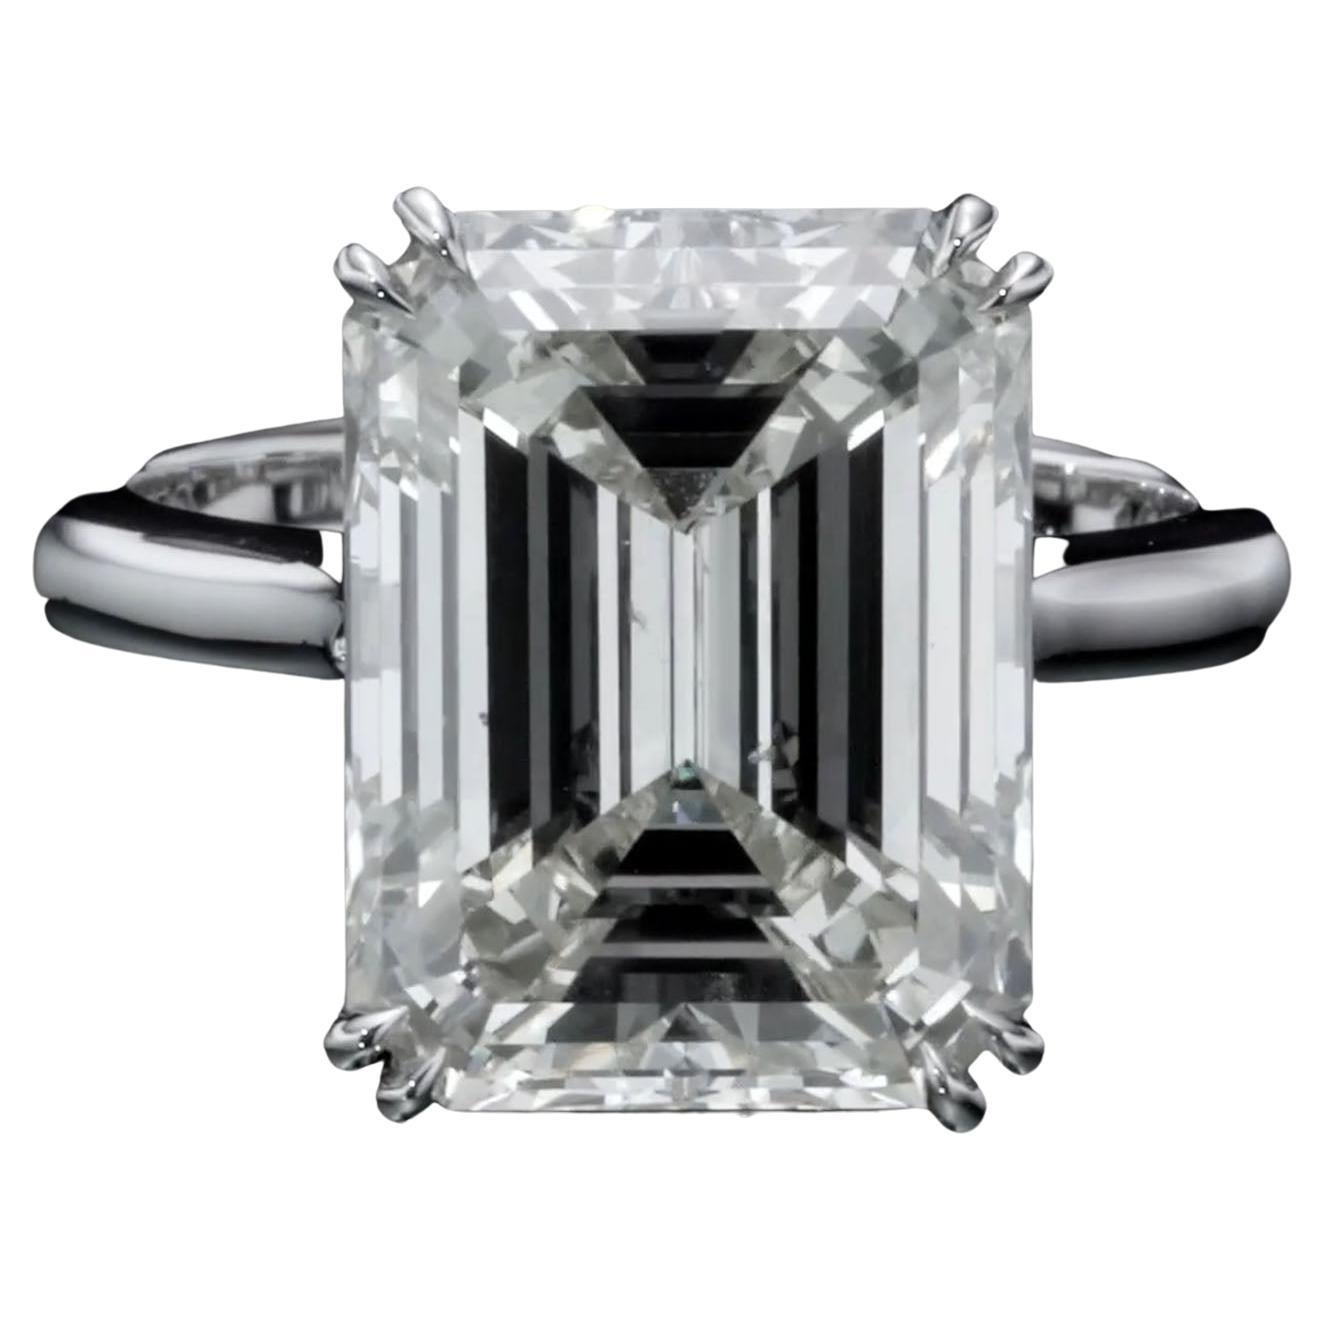 10.05 Carat Natural Diamond Ring Emerald Cut Color L Clarity SI1